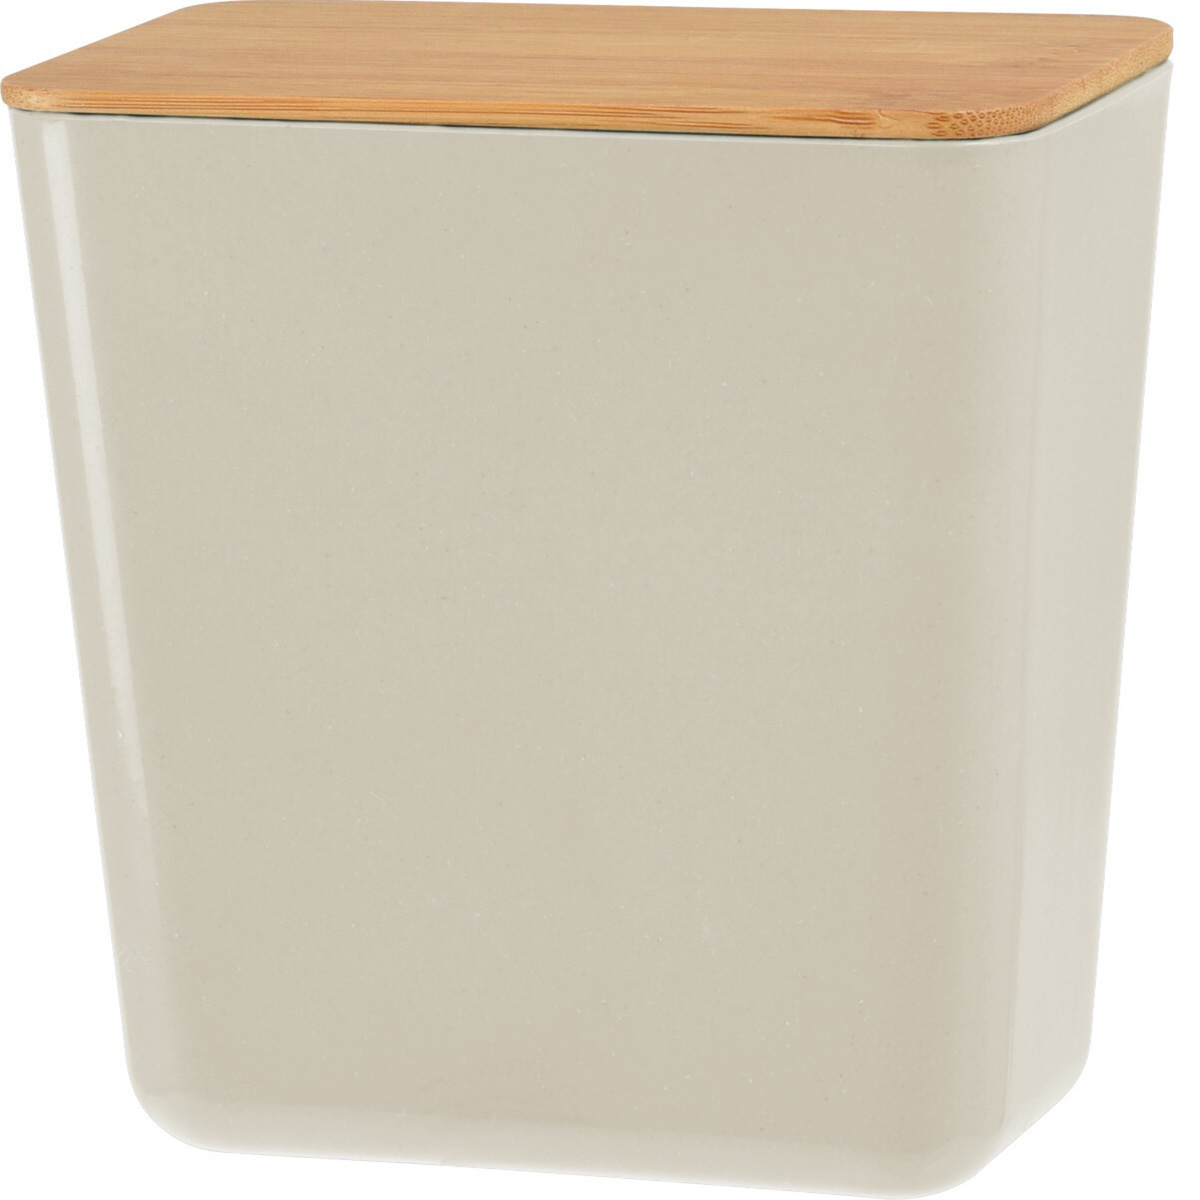 Úložný box s bambusovým víkem Roger, 13 x 13,7 x 8 cm, béžová